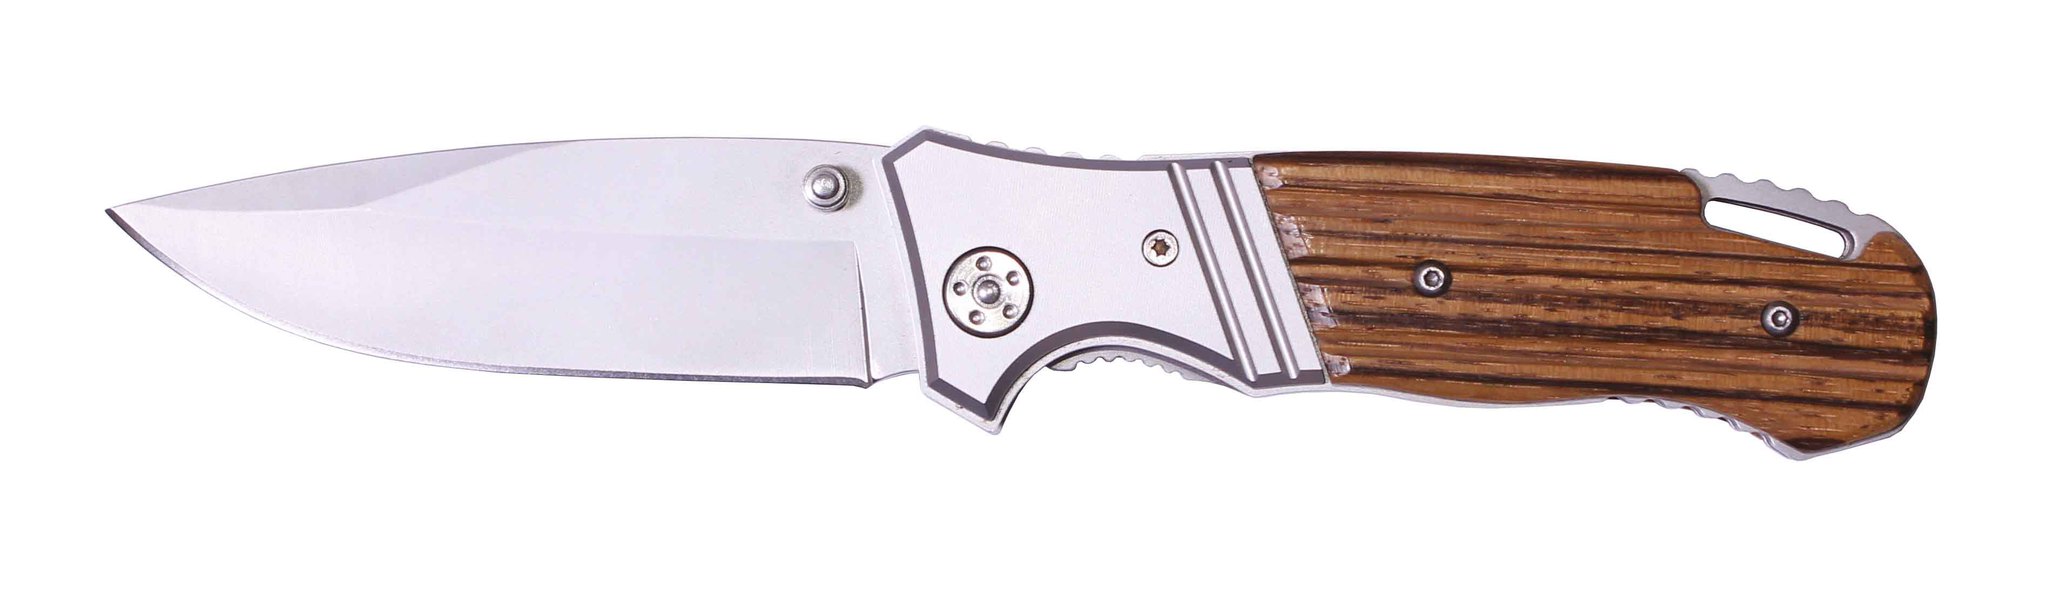 Нож складной Stinger HJ-083AW, сталь 420, дерево